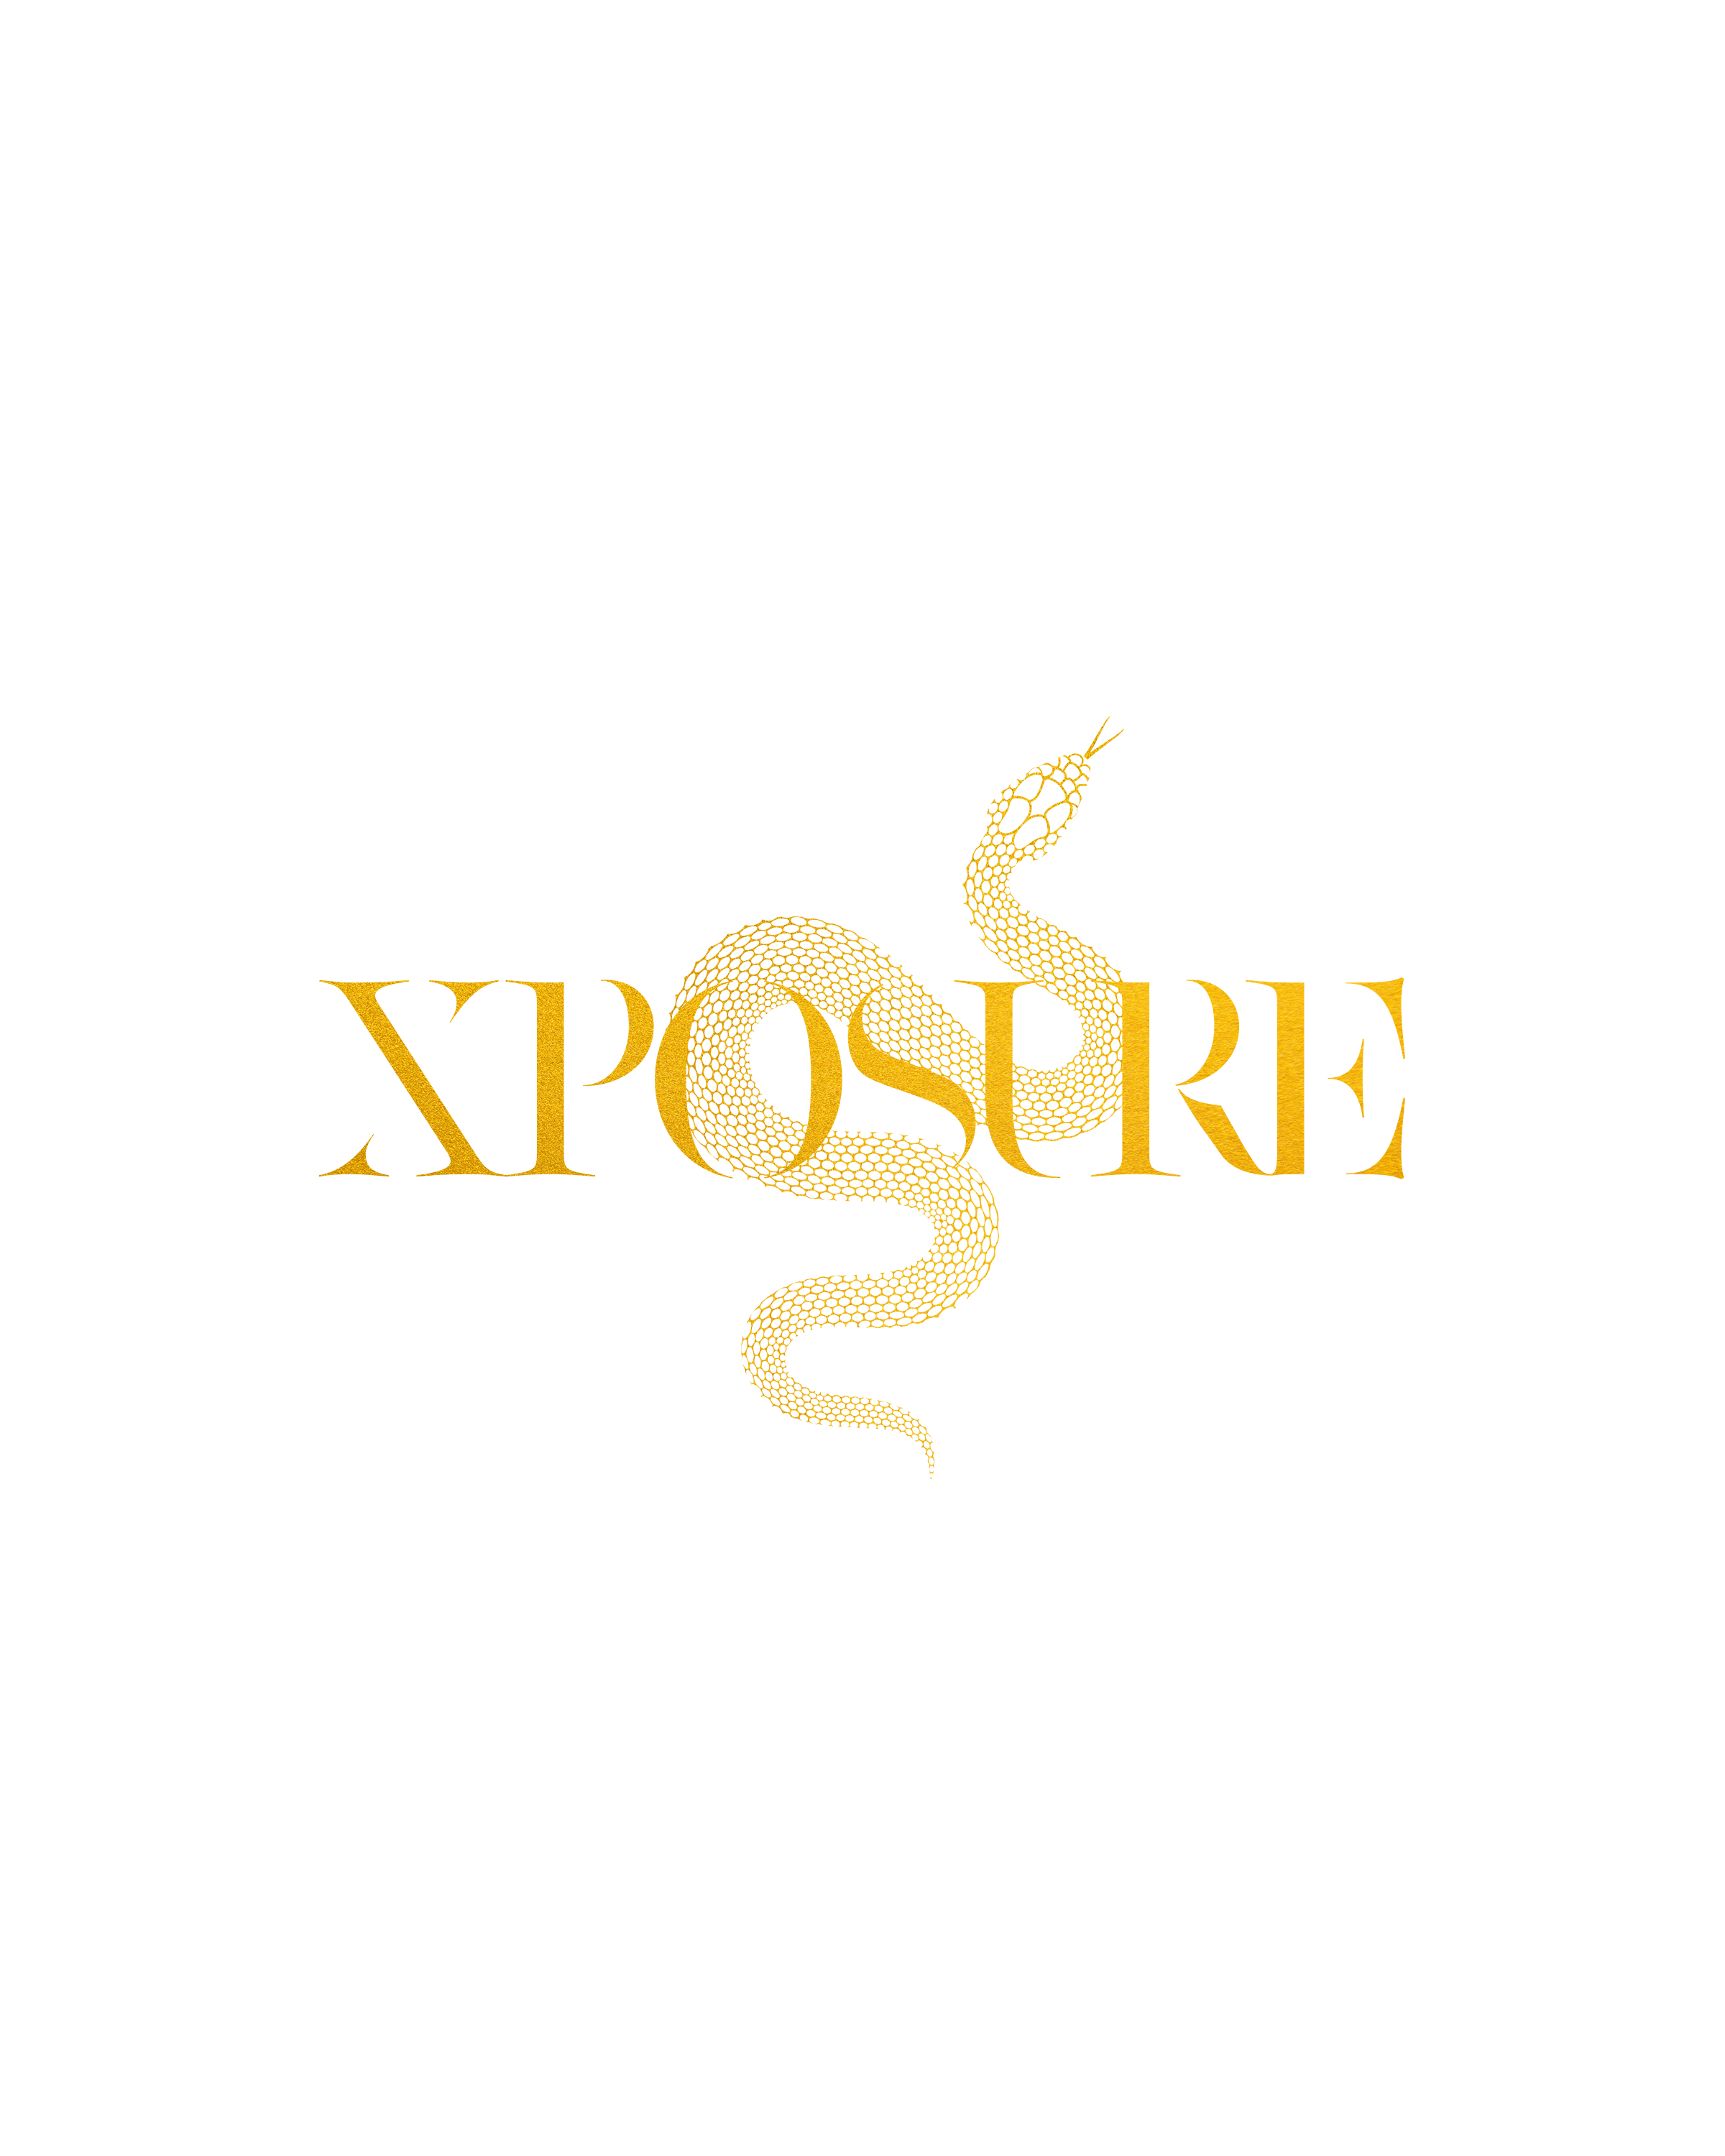 XPOSURE-BrochurePG1.png